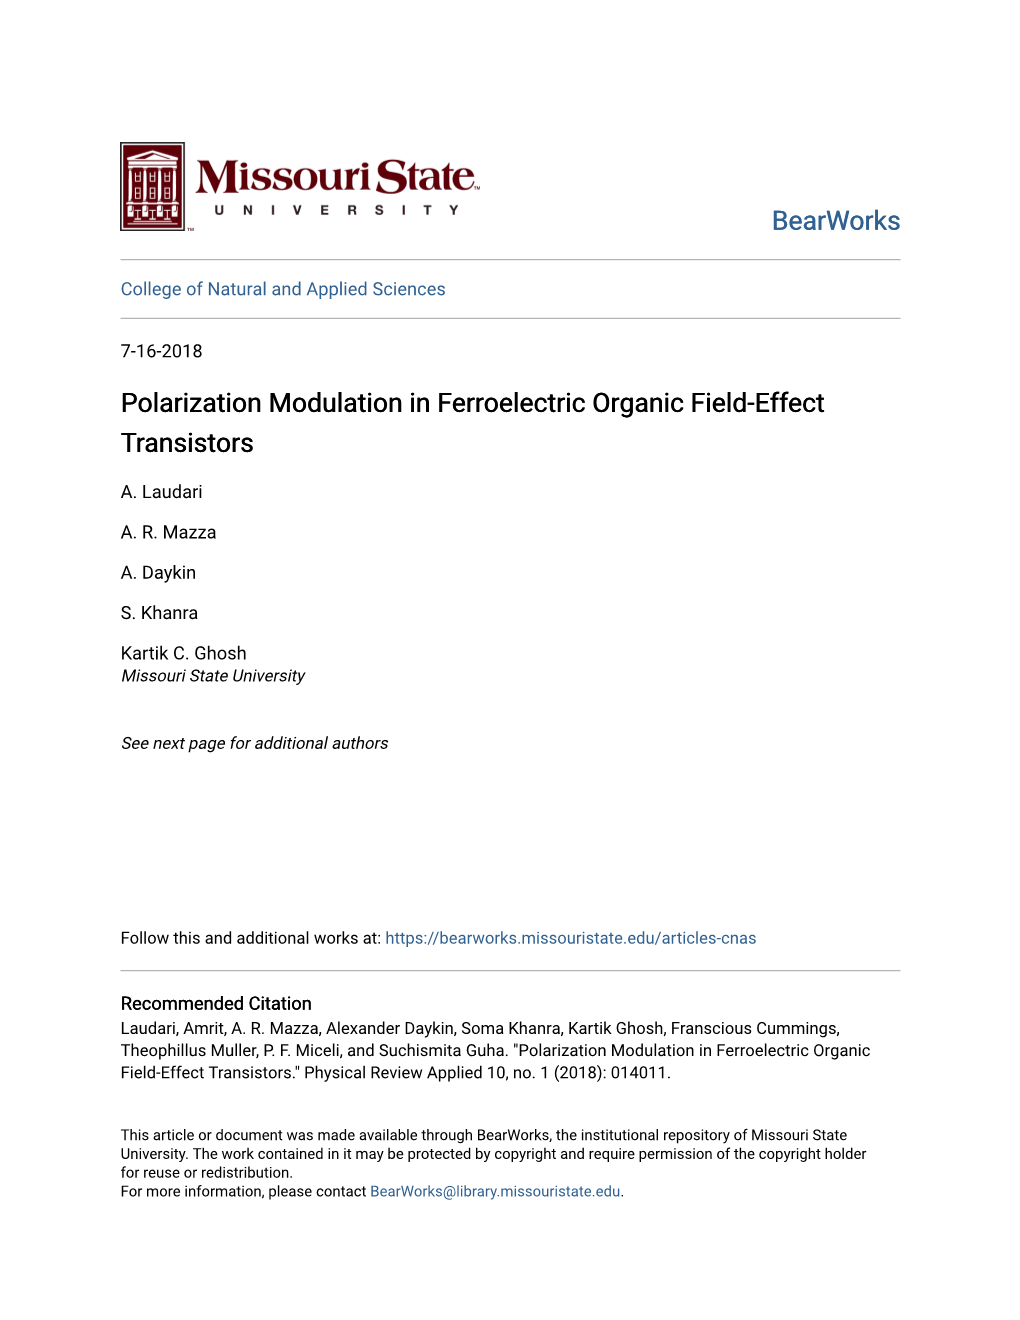 Polarization Modulation in Ferroelectric Organic Field-Effect Transistors